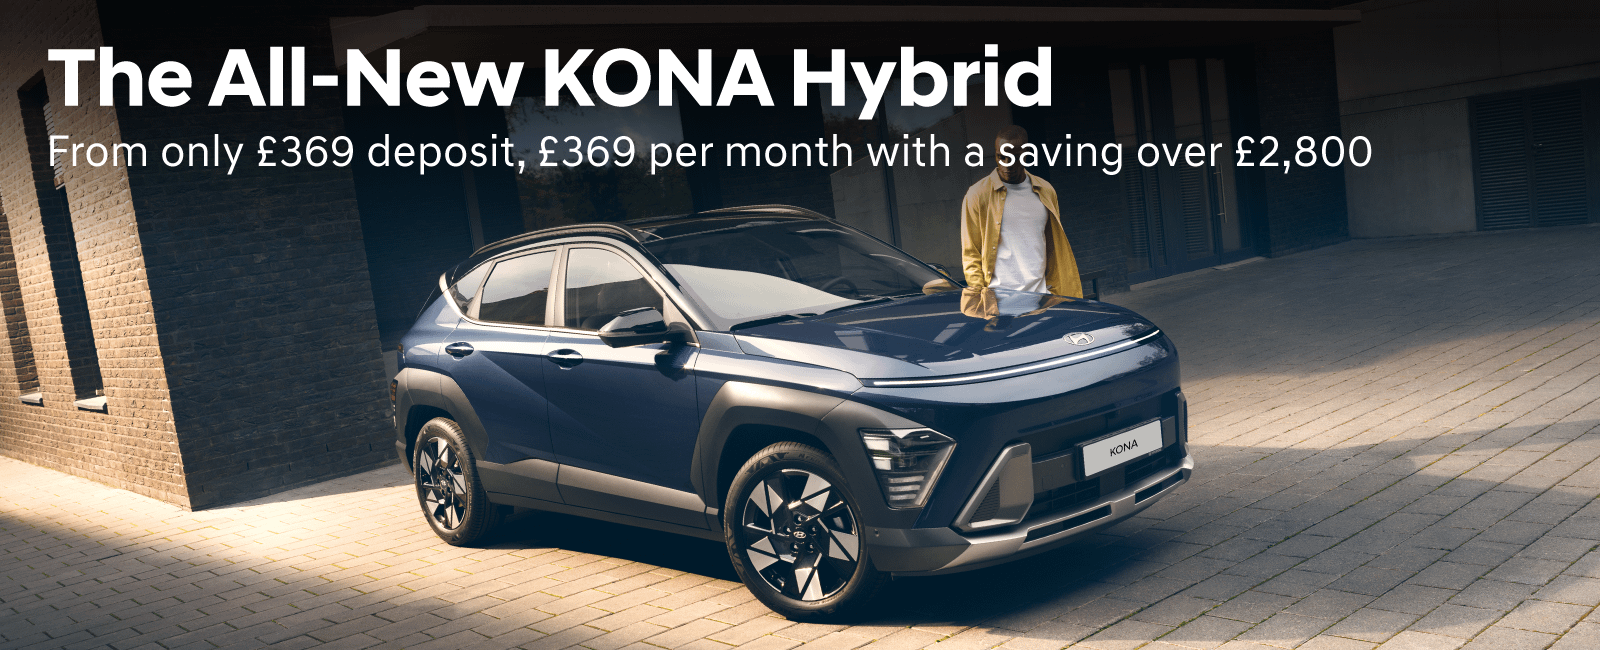 The Hyundai KONA Hybrid from only £369 deposit, £369 per month